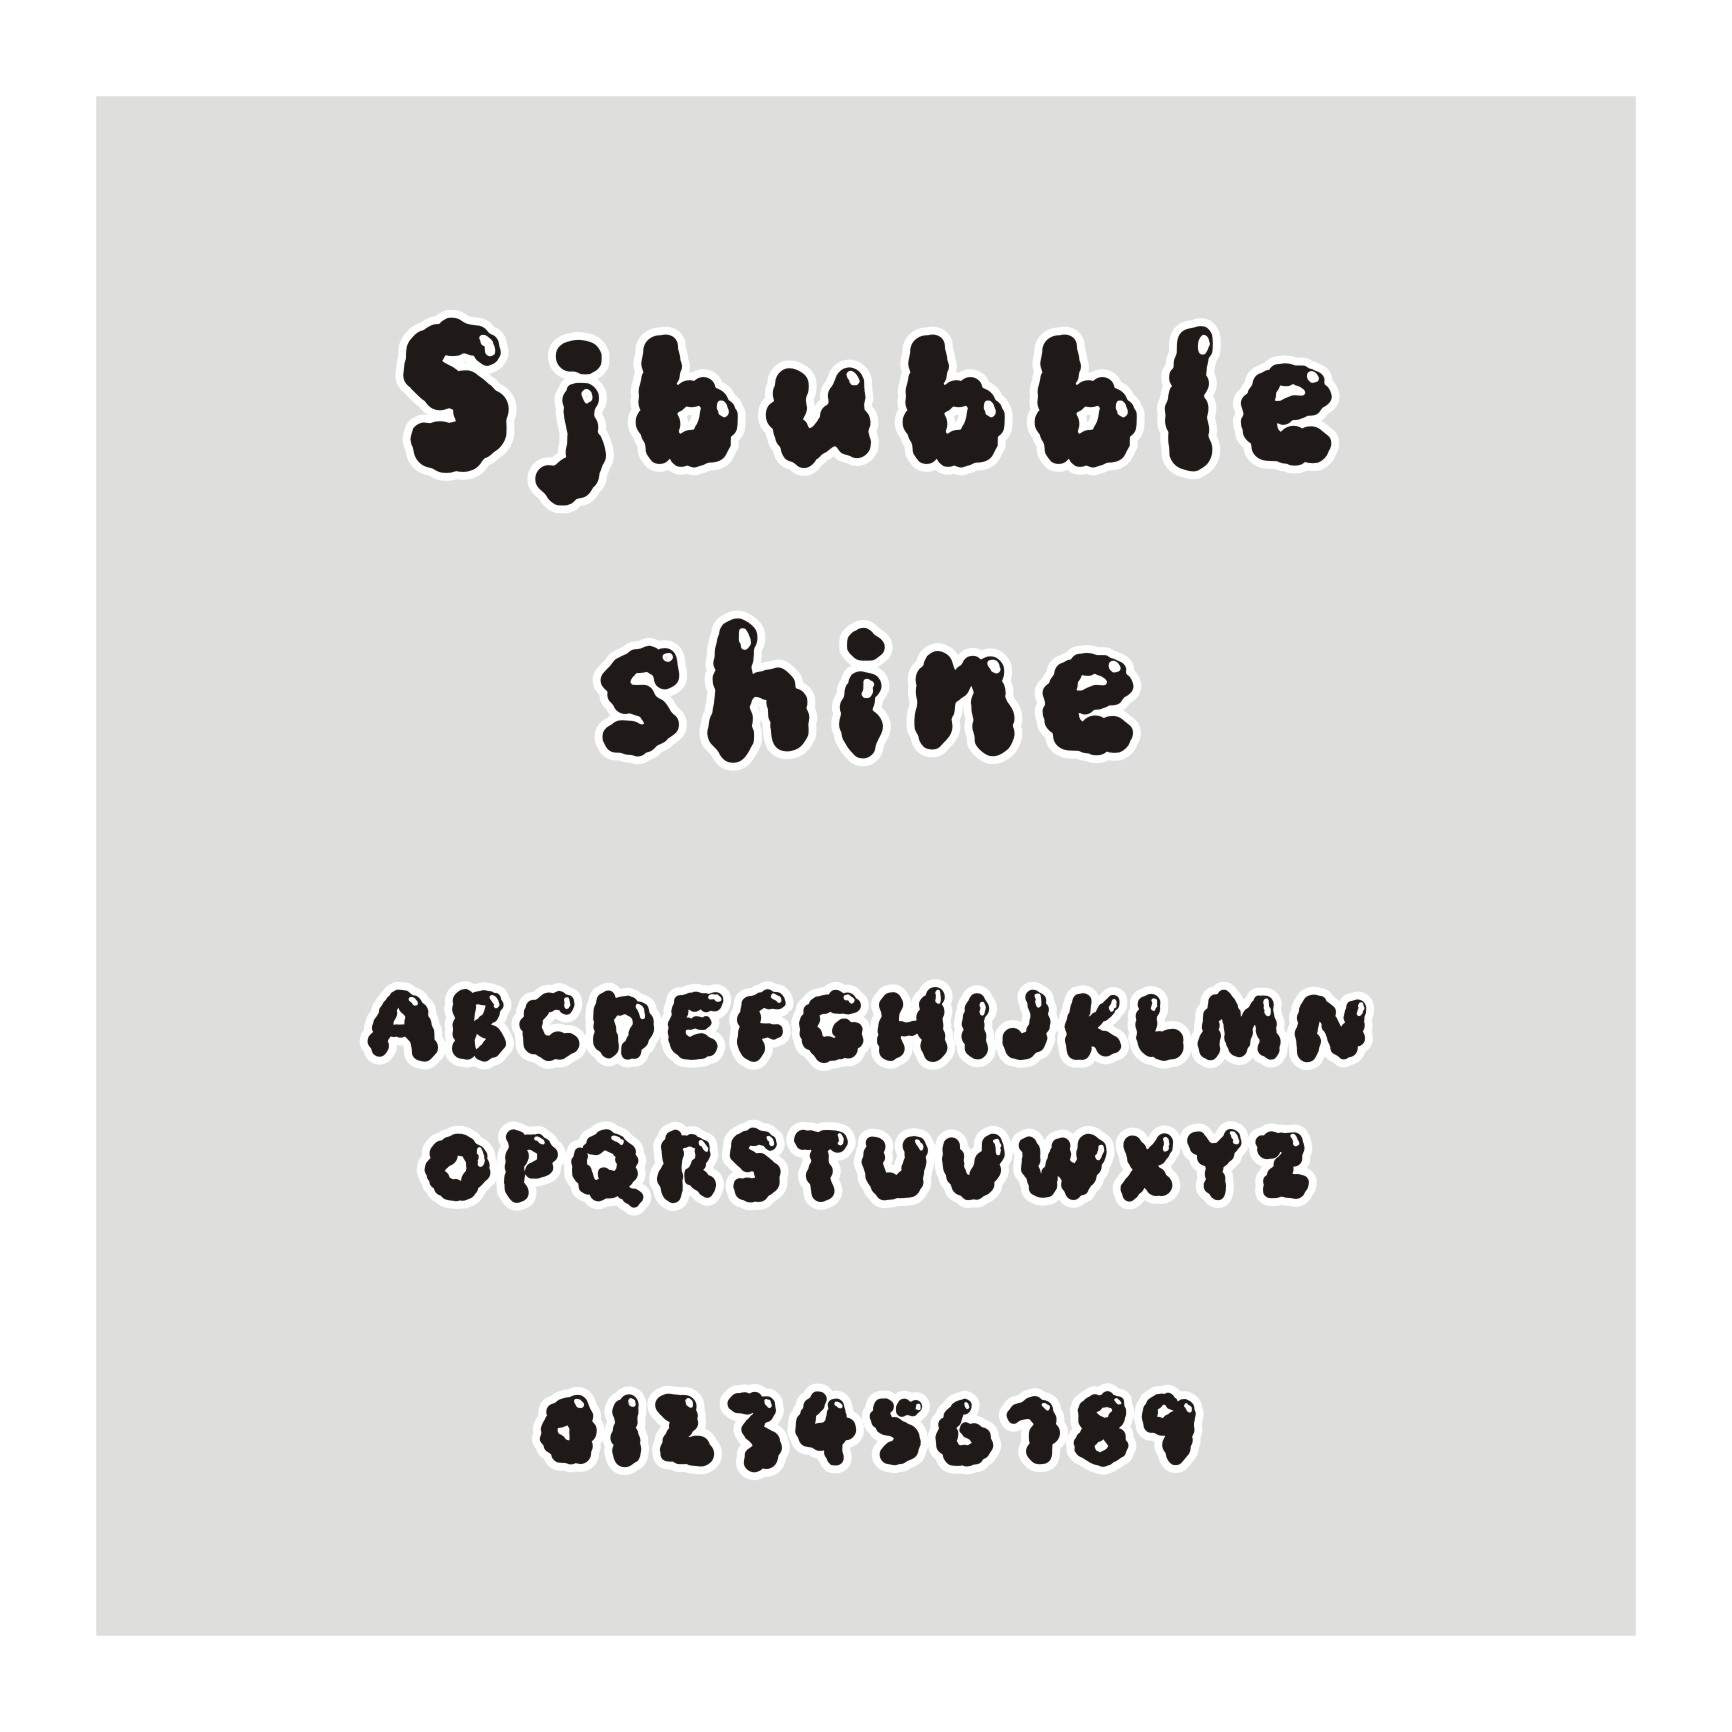 SJbubble shine